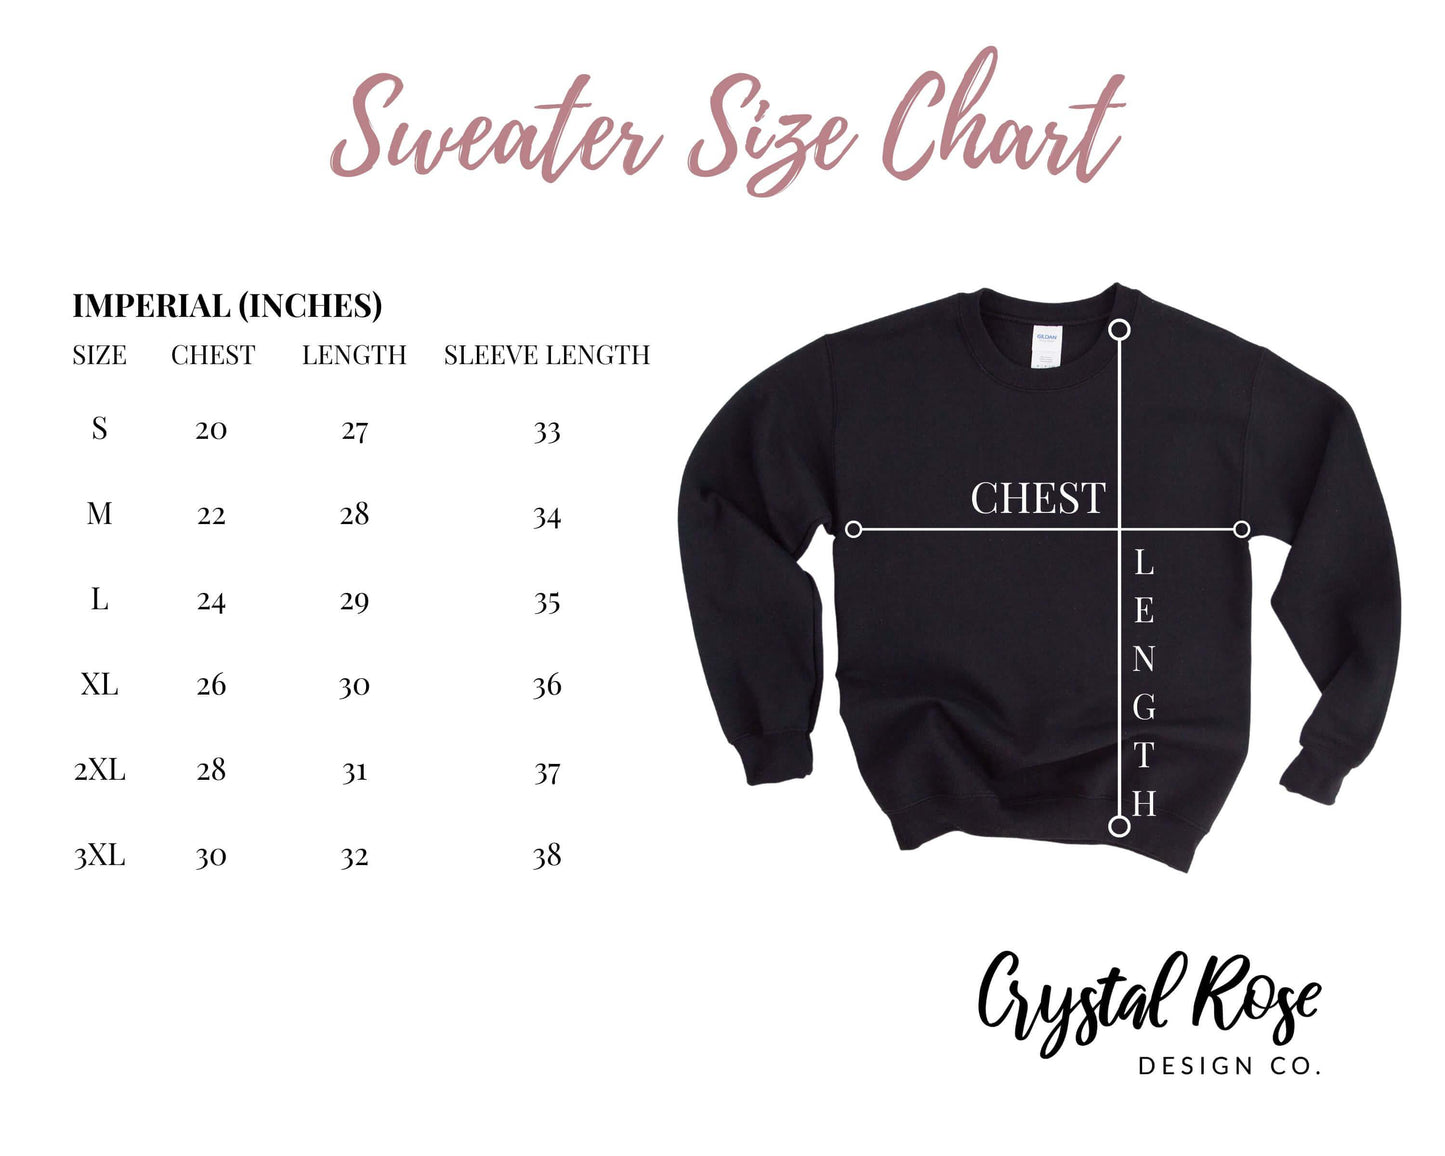 Merry Christmas Crewneck Sweater - Crystal Rose Design Co.